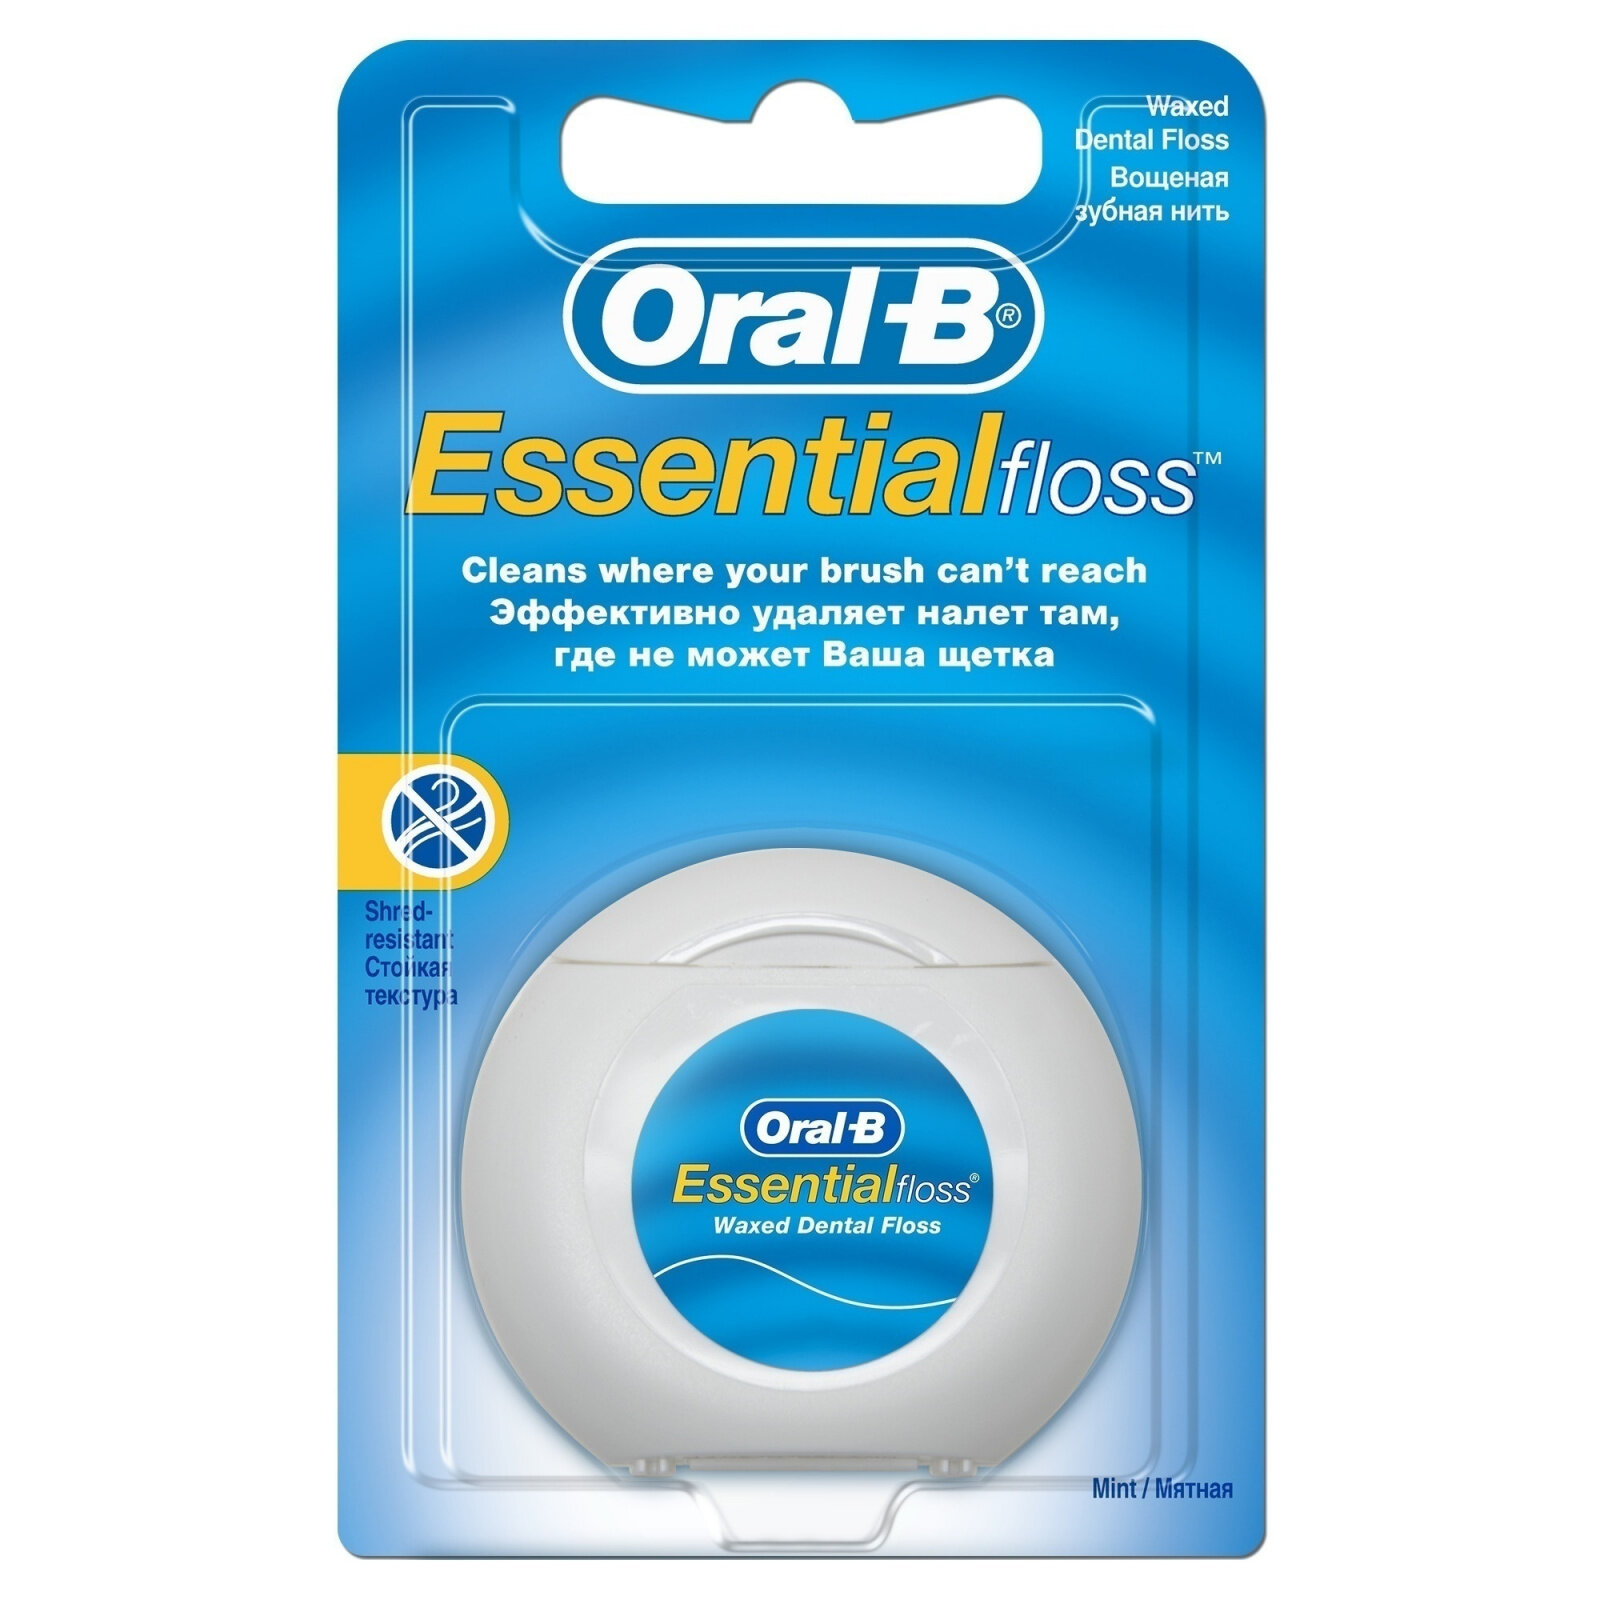 Зубная нить Oral-B 50 м, Орал-би Essential floss, мятная (80772)